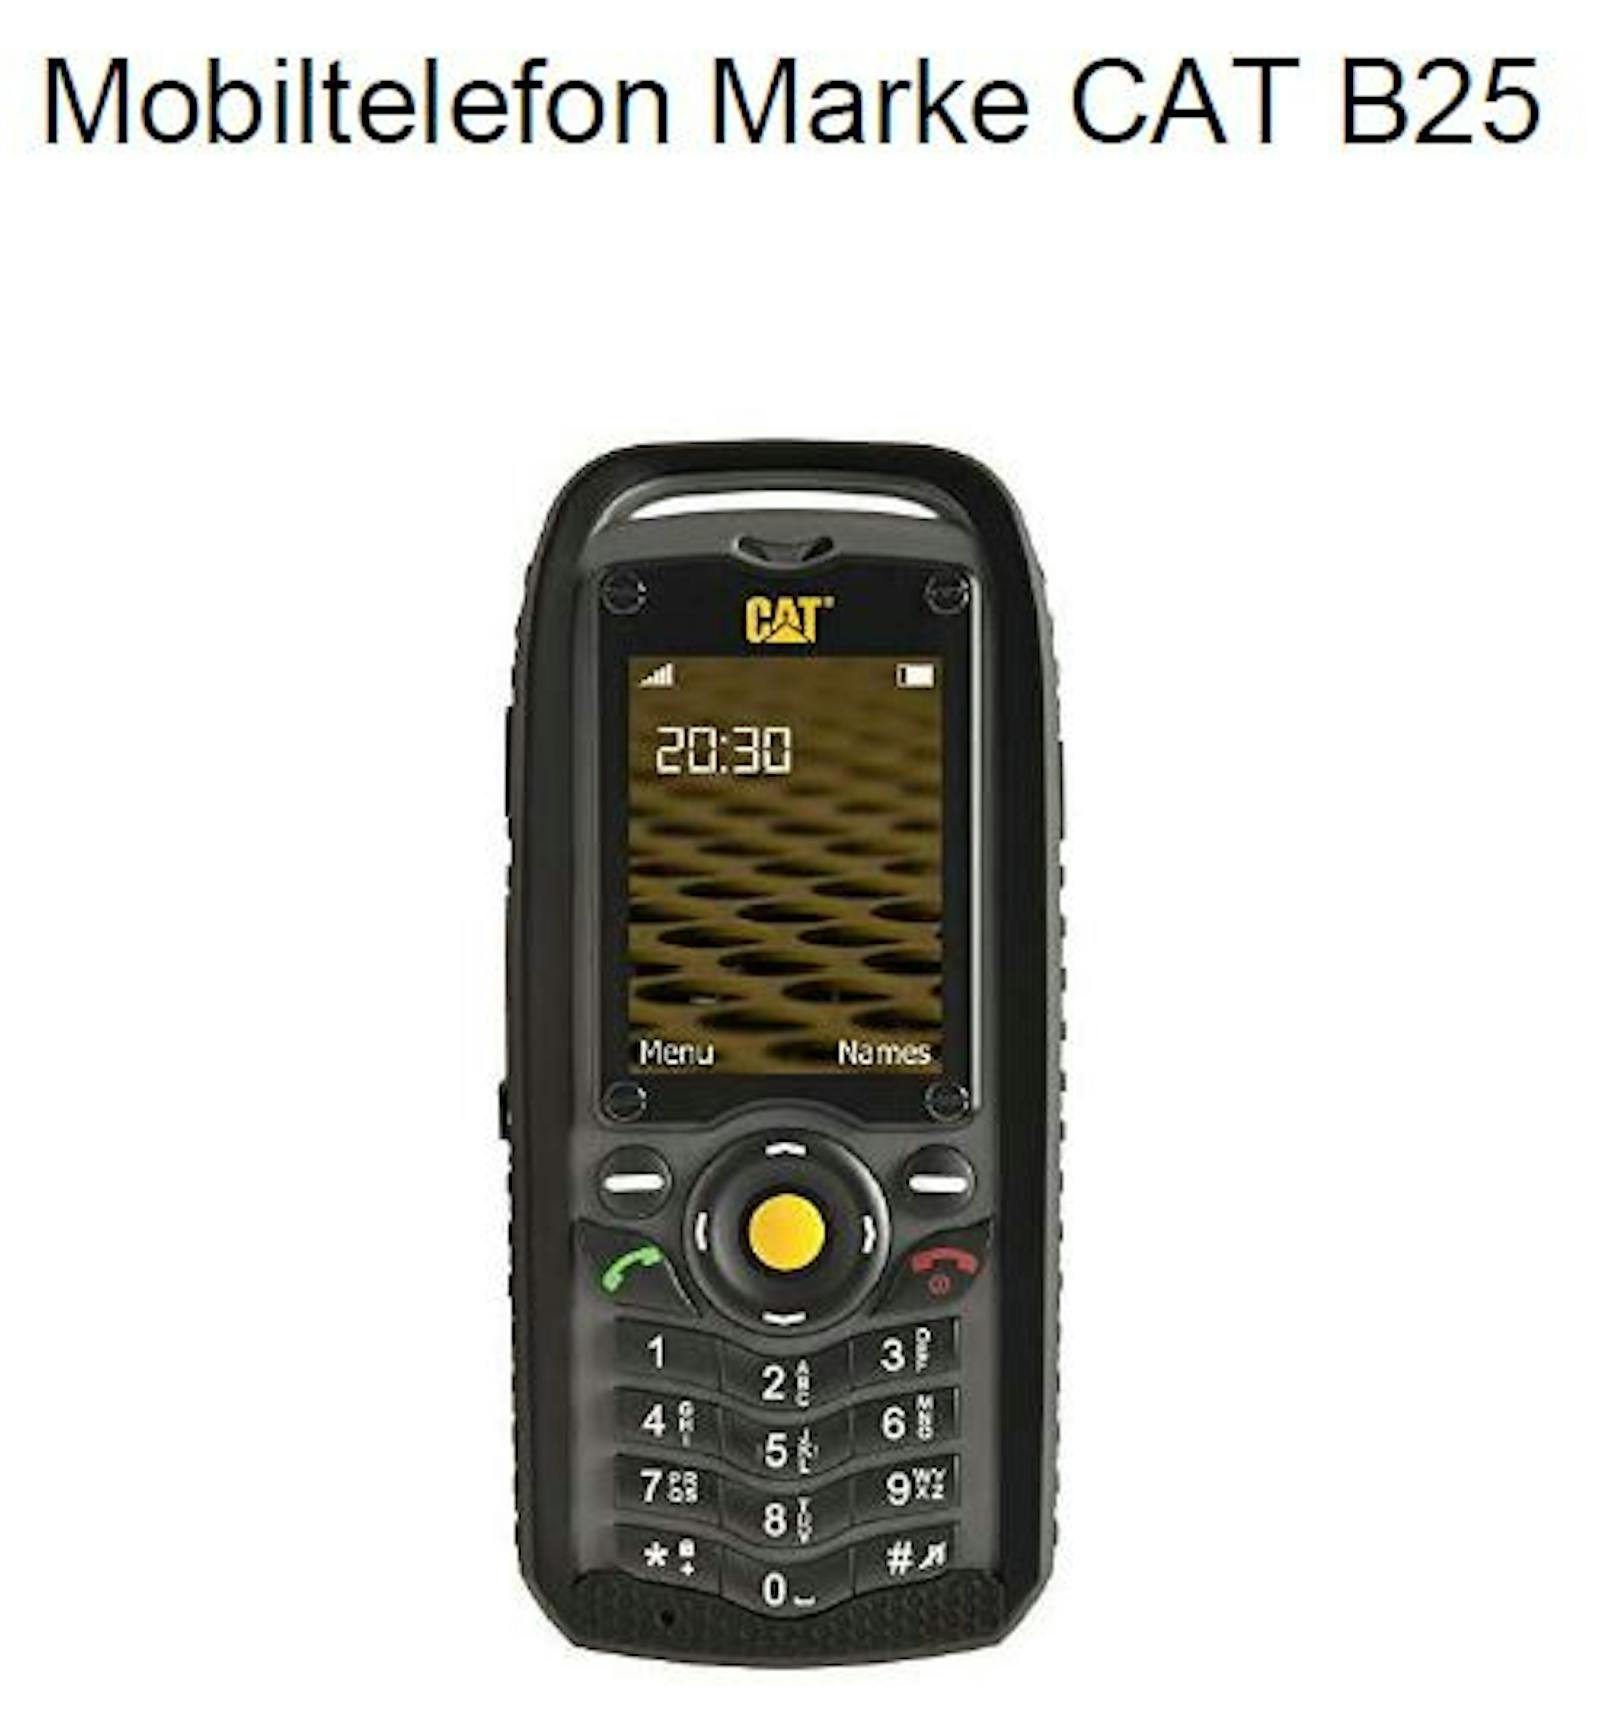 Mobiltelefon der Marke CAT B25